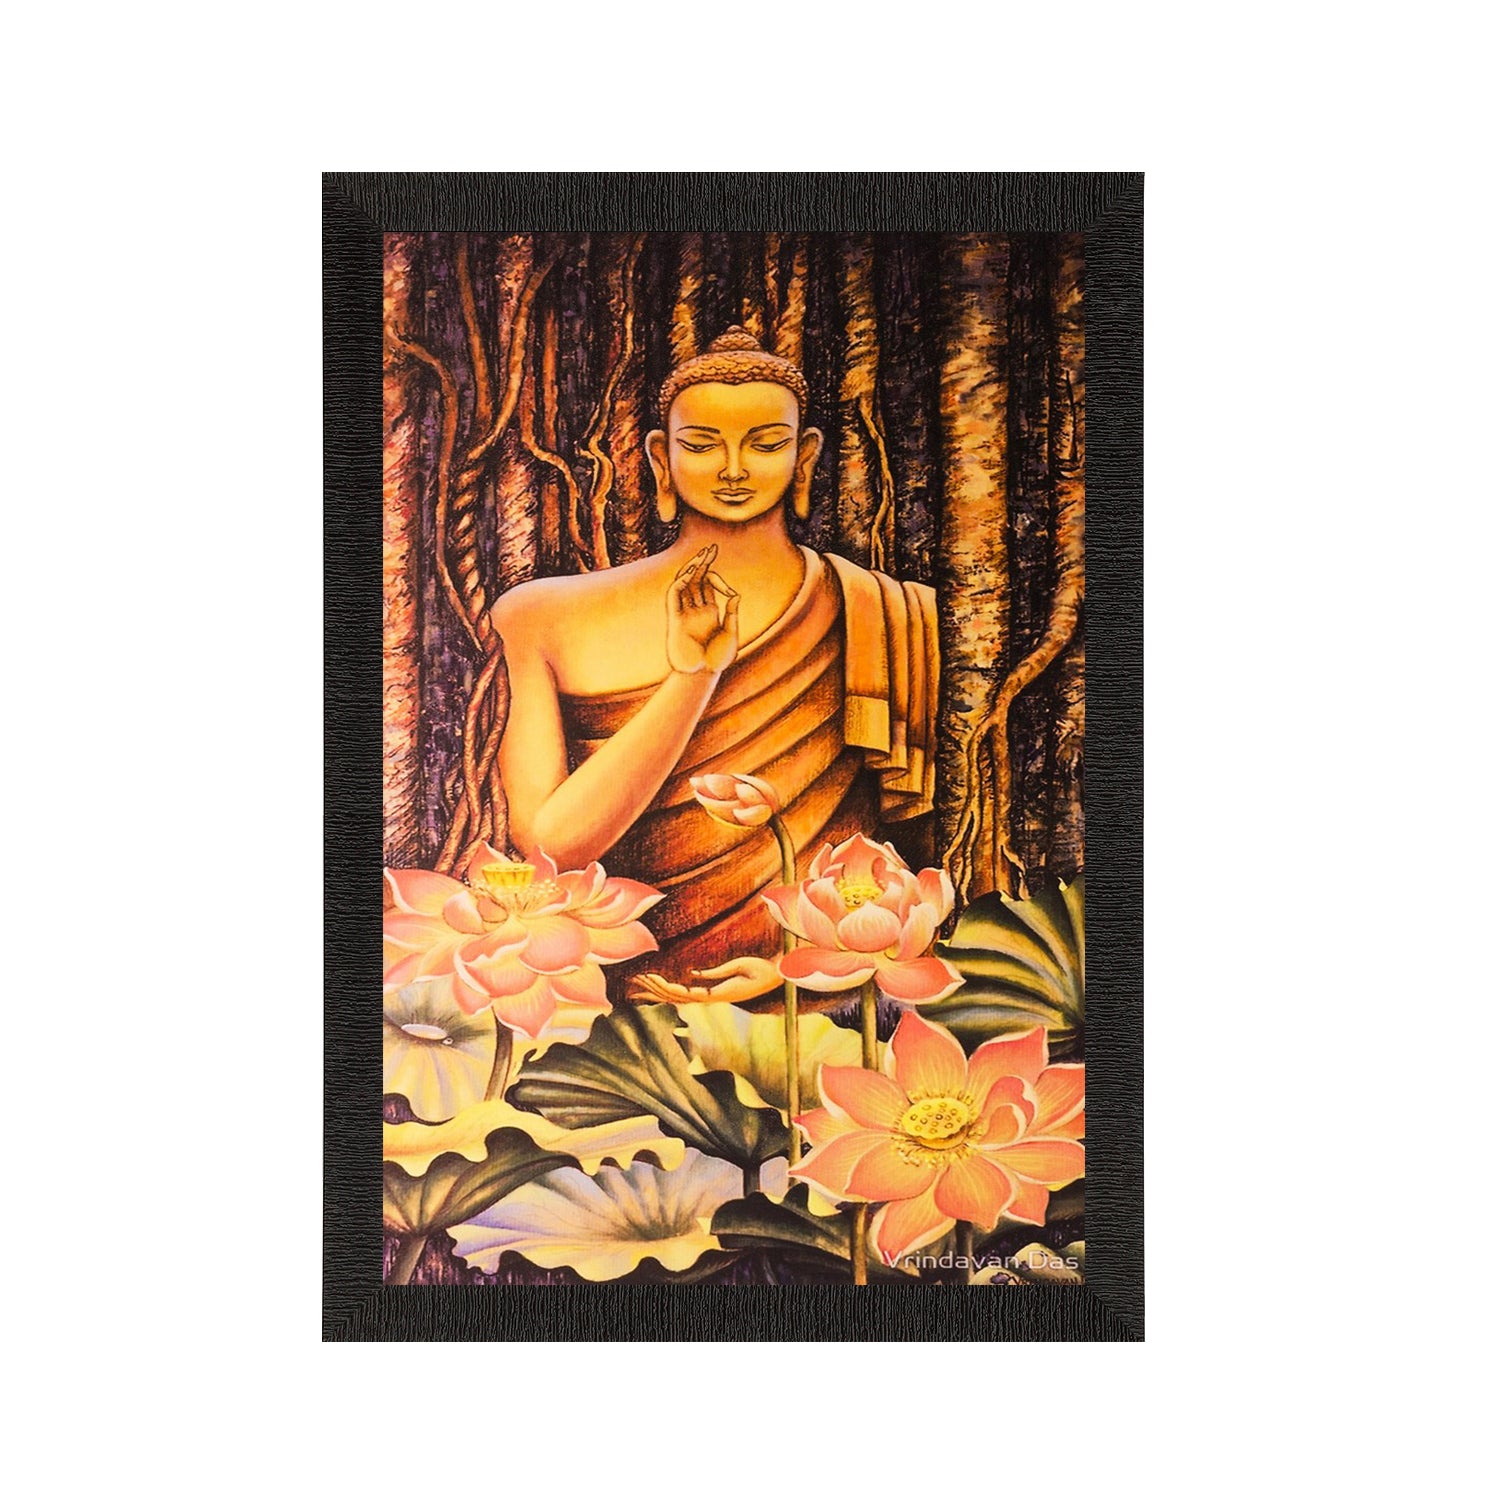 Blessing Buddha Painting Digital Printed Religious Wall Art